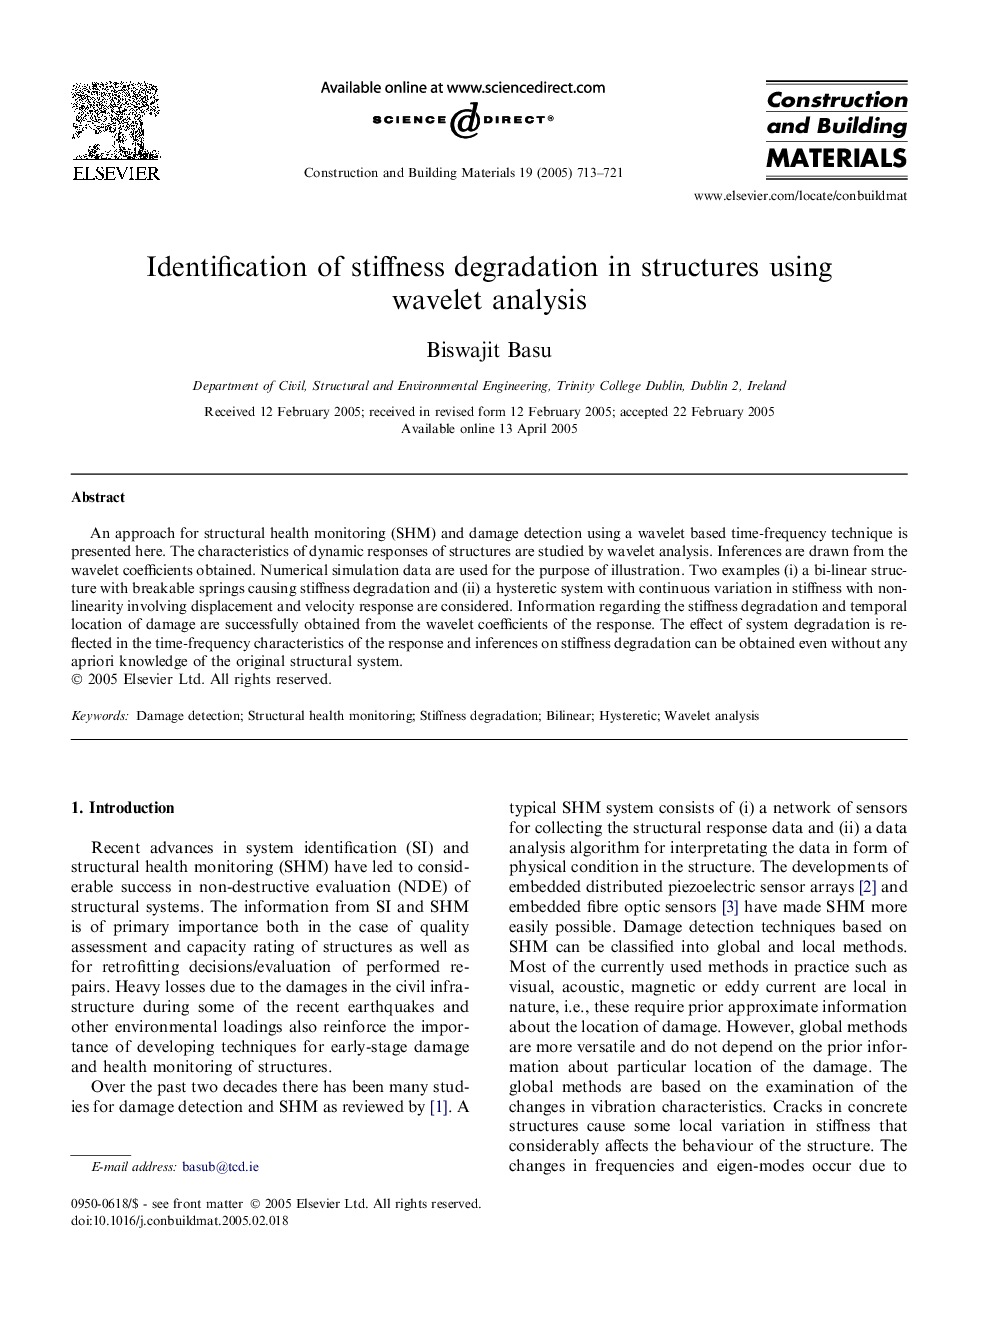 Identification of stiffness degradation in structures using wavelet analysis